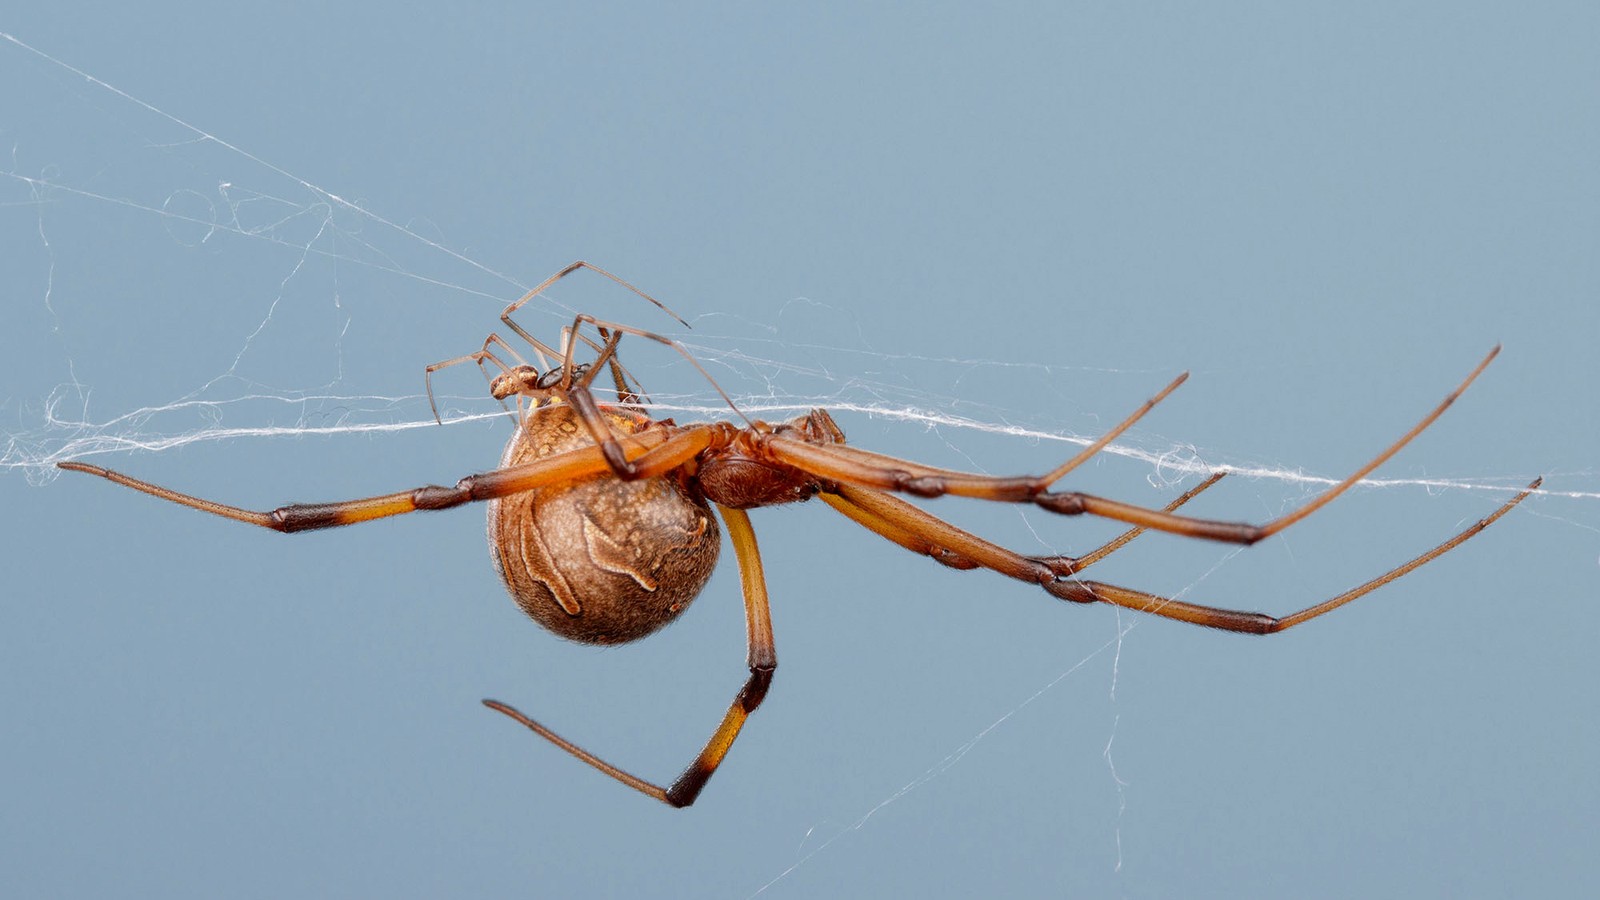 Zijdelings Verenigde Staten van Amerika bagageruimte The Spiders That Choose Death - The Atlantic